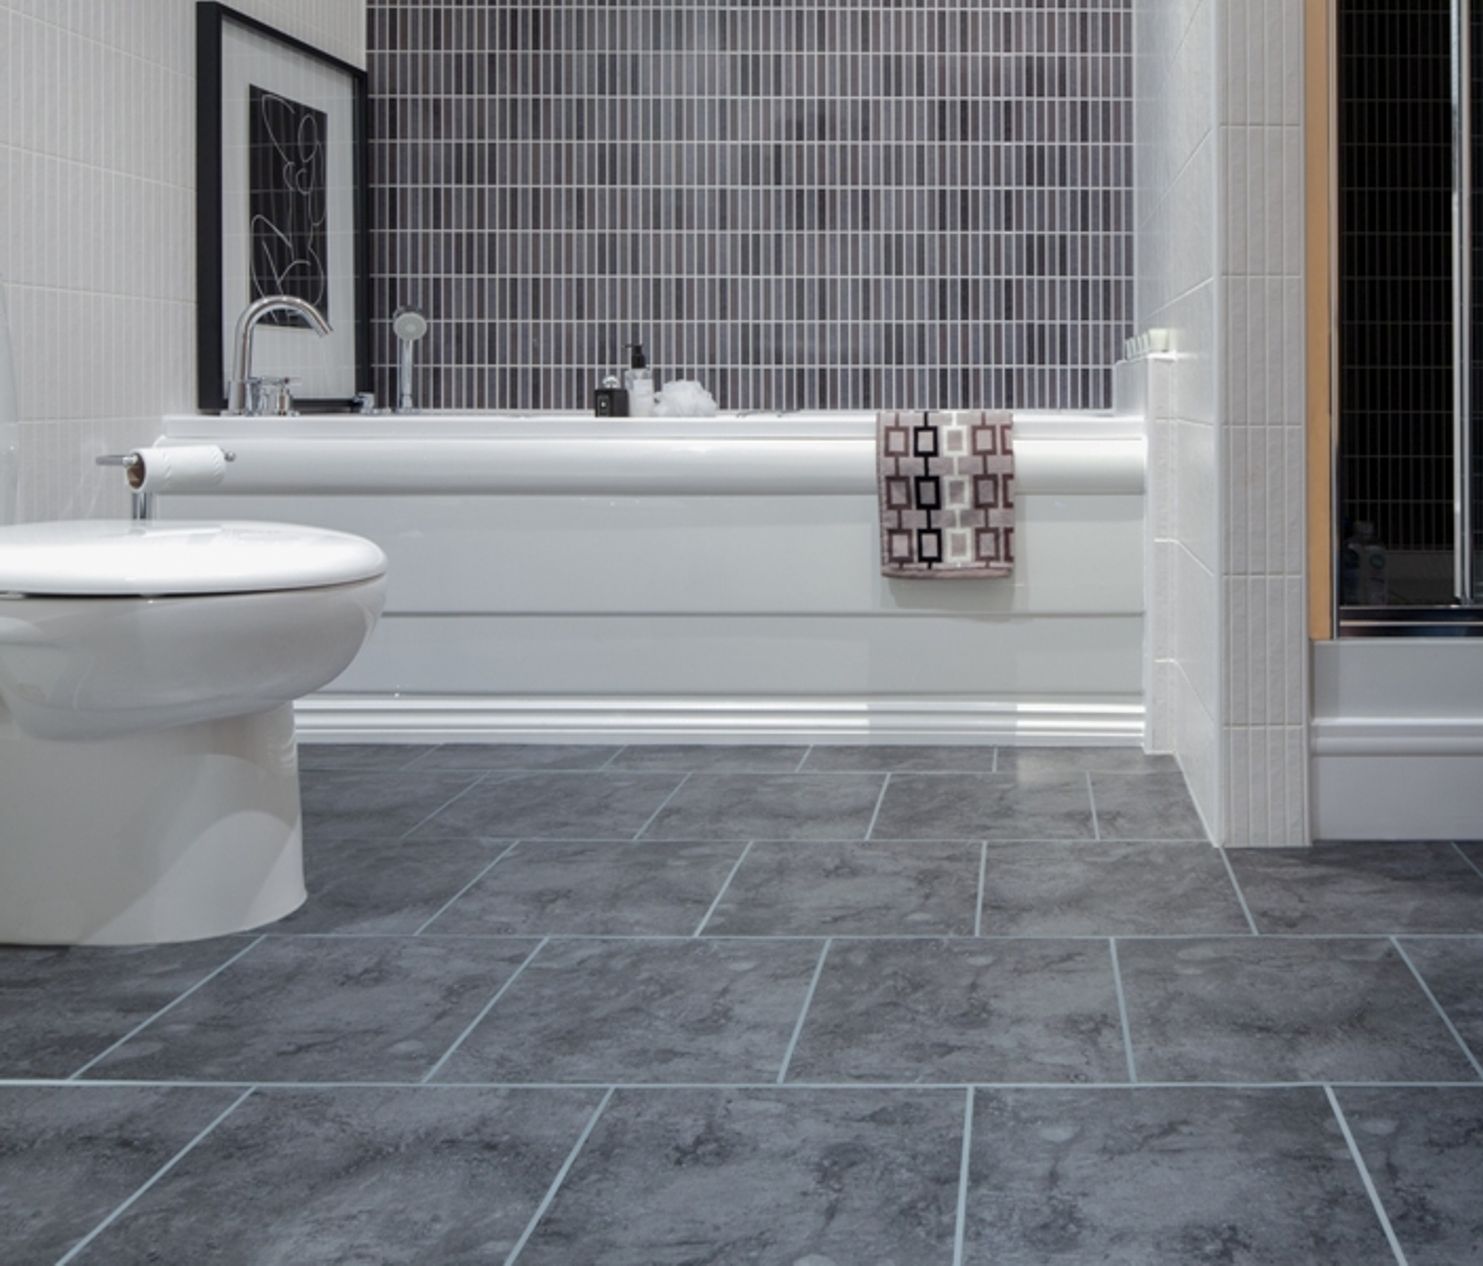 Top 3 Grey Bathroom Tile Ideas - DecorIdeasBathroom.com